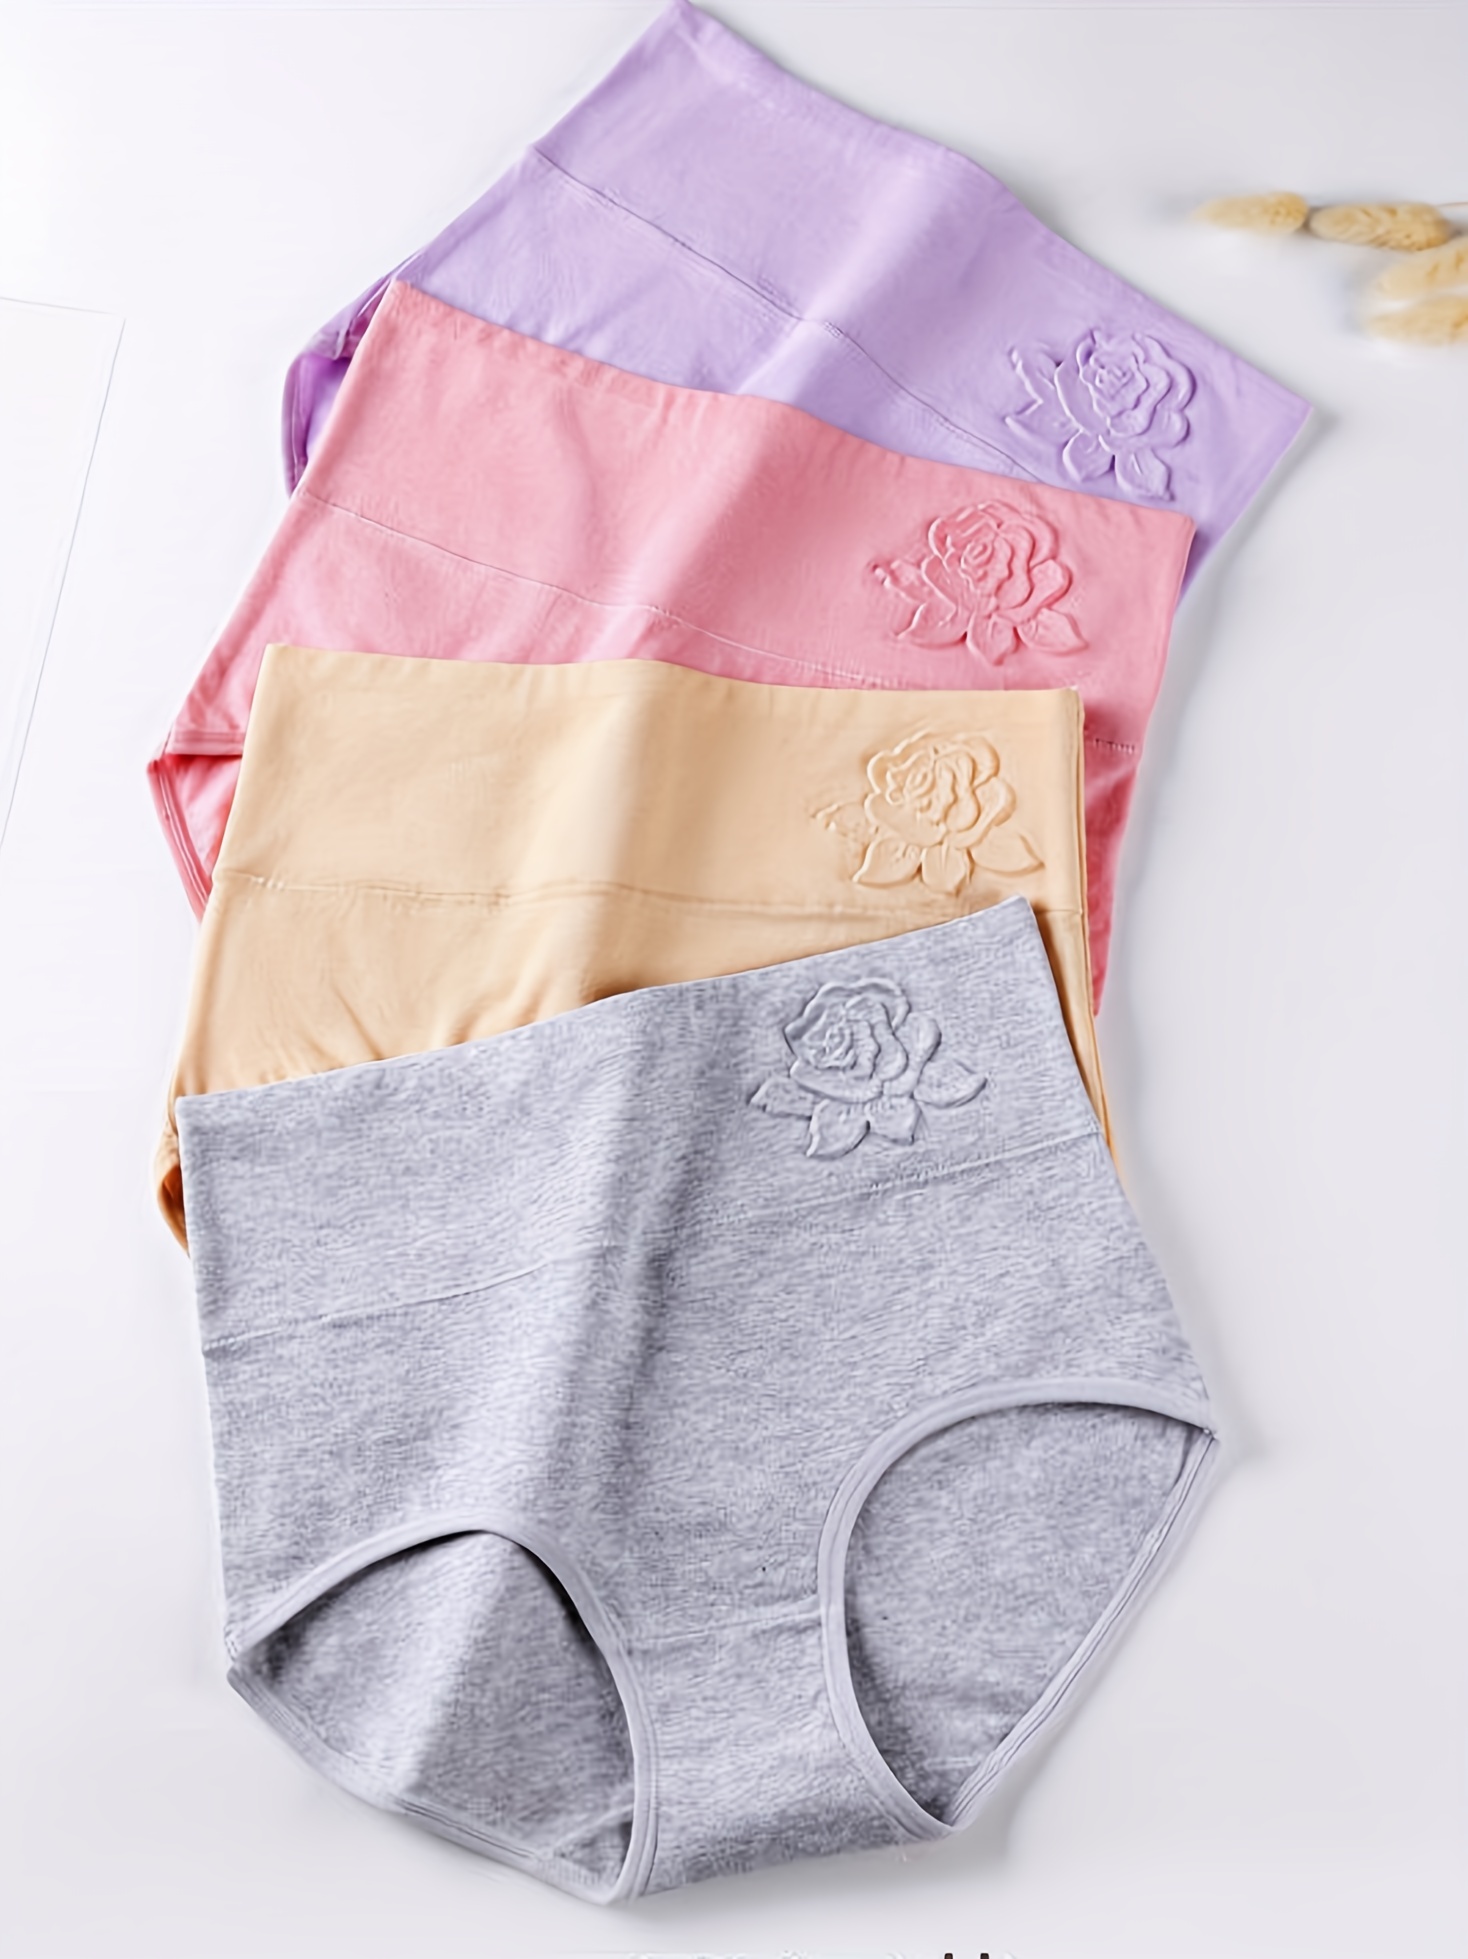 4pcs Colorblock Intimates Briefs, Comfy & Breathable Stretchy Panties,  Women's Lingerie & Underwear